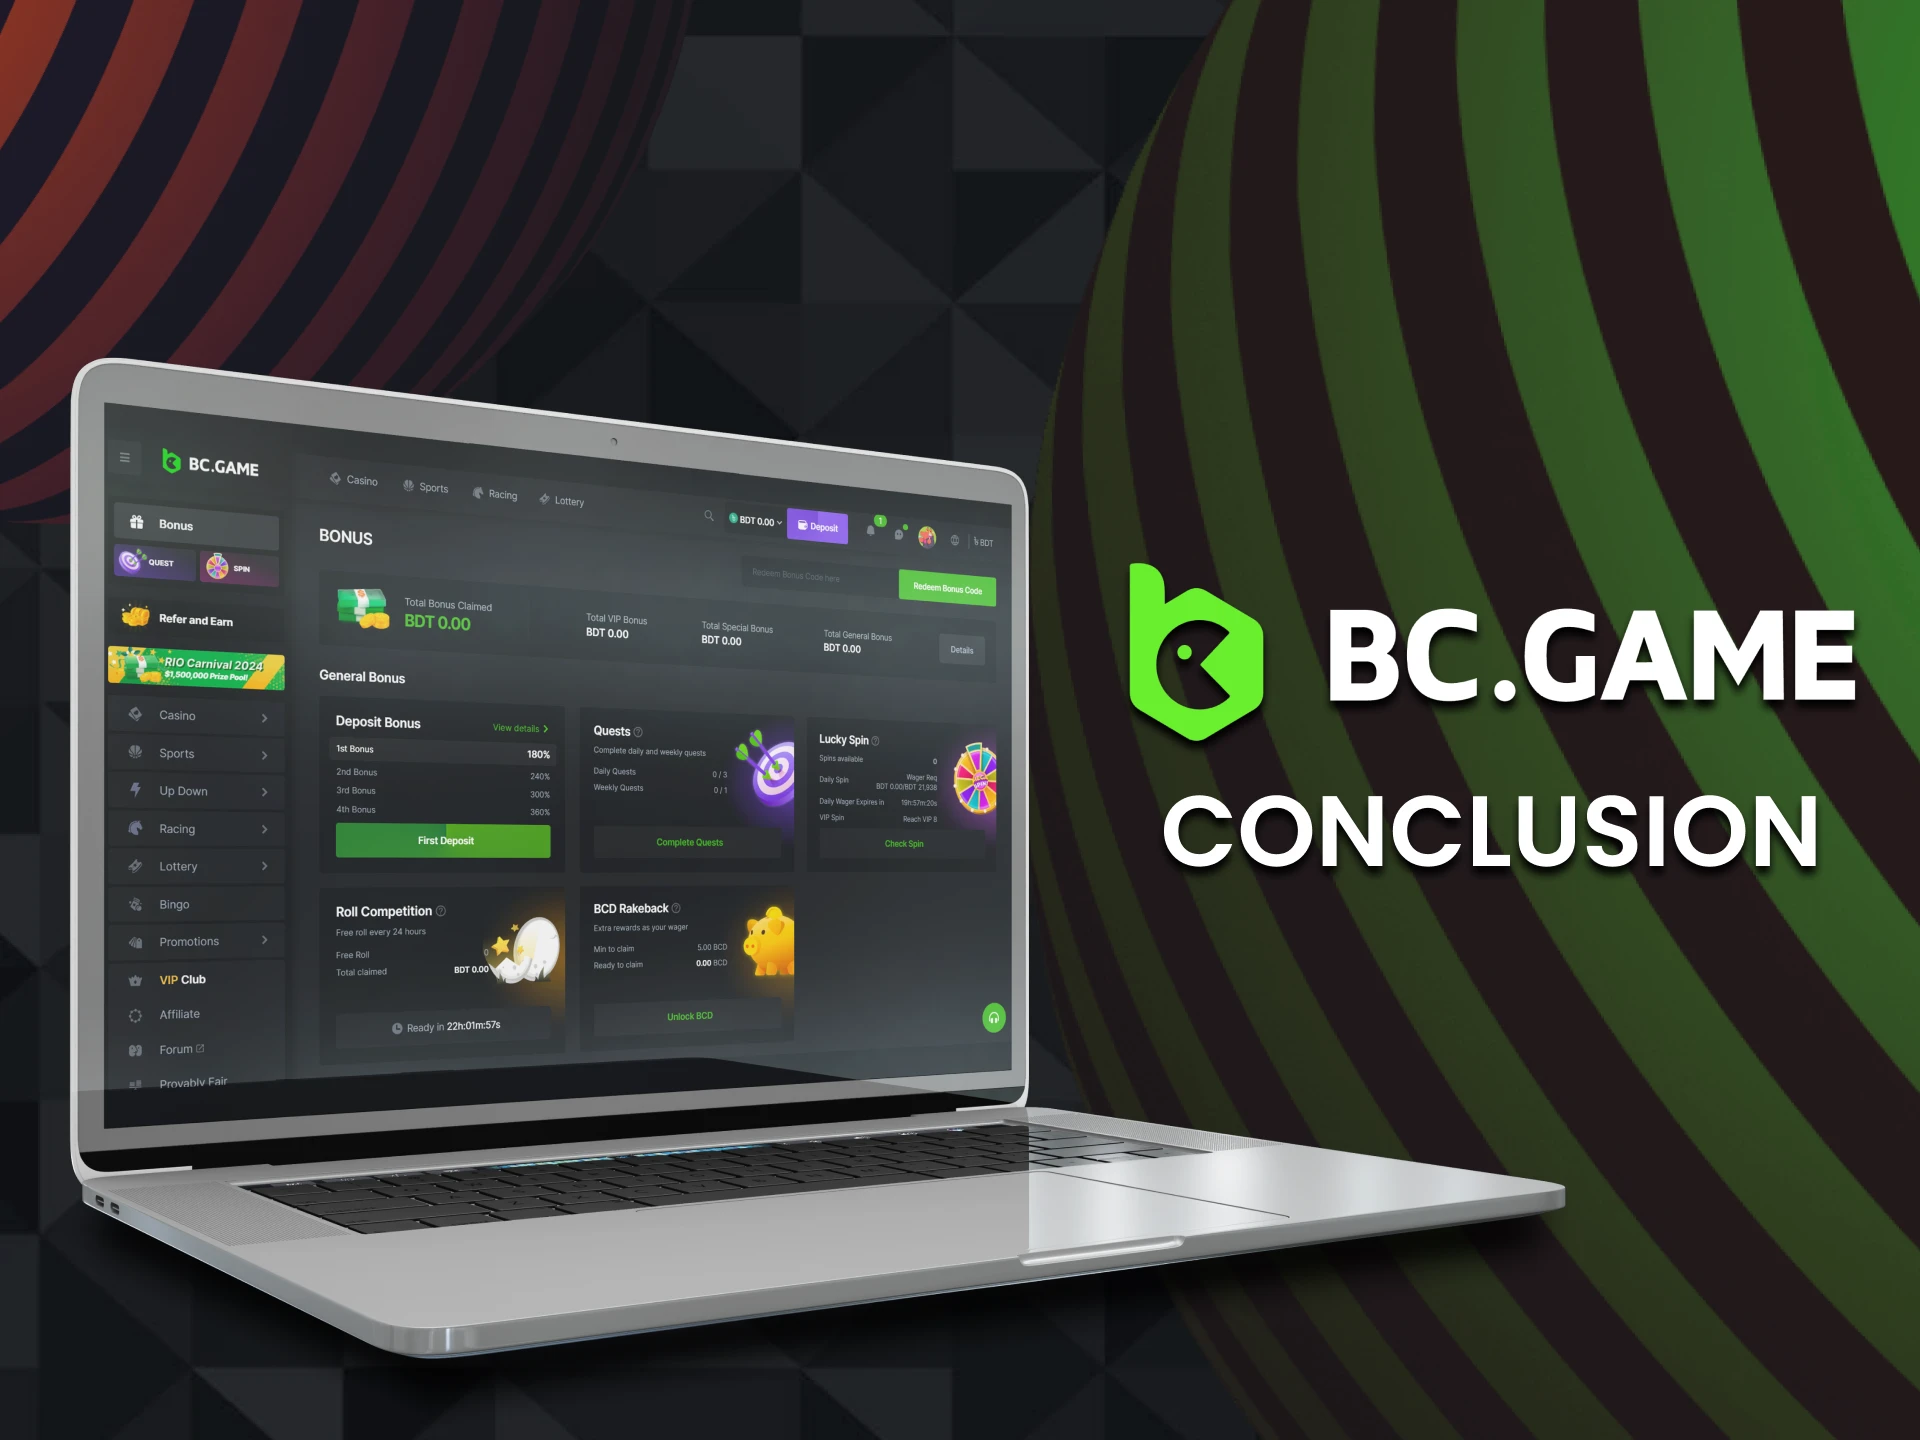 BC Game gives many bonuses for Bangladeshi bettors.